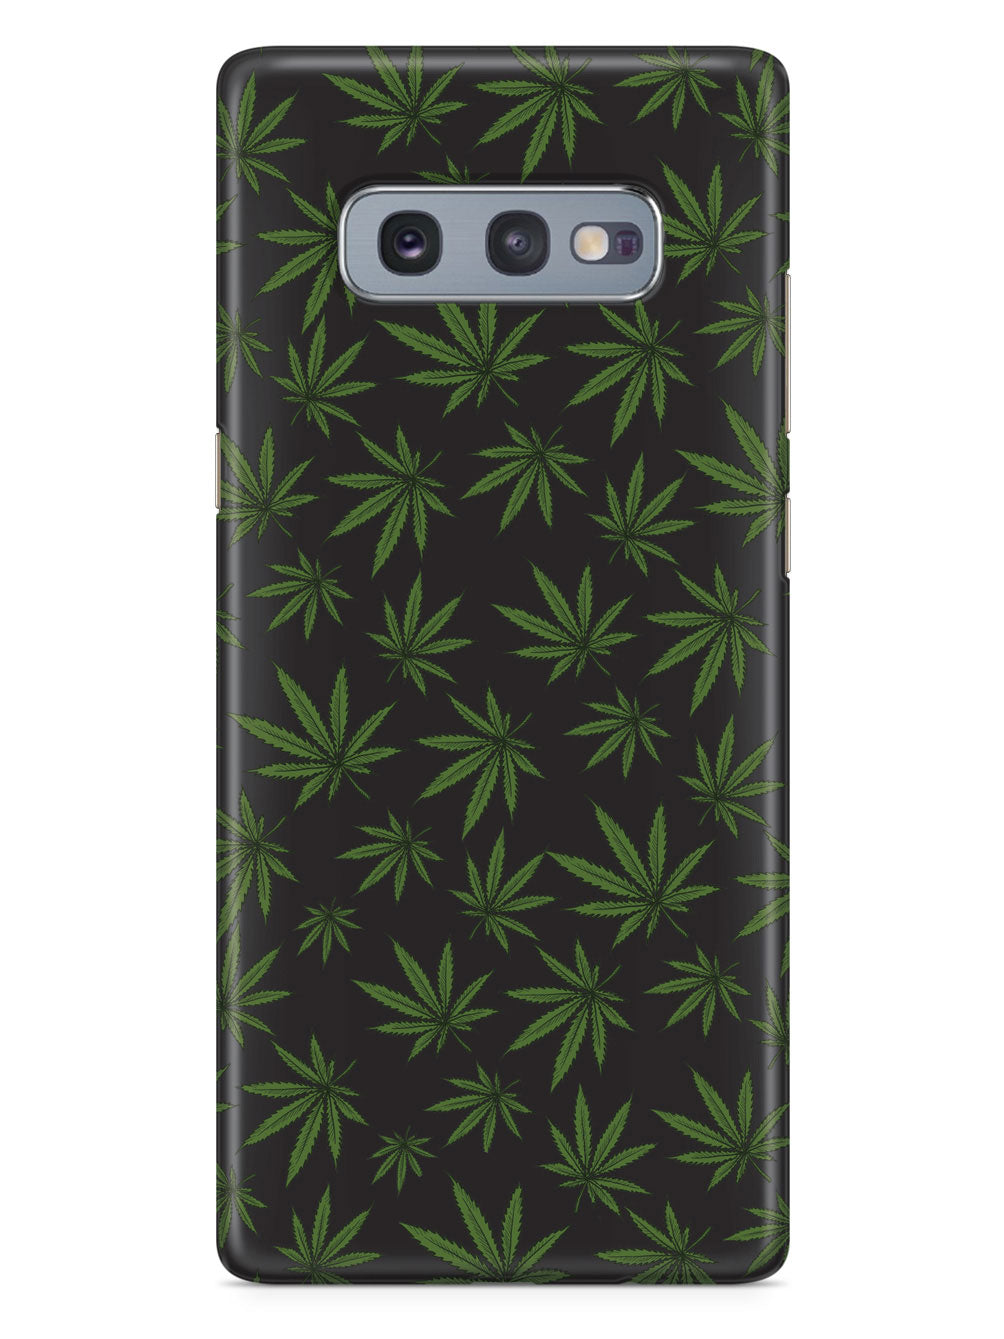 Marijuana Leaf Pattern - Black Case